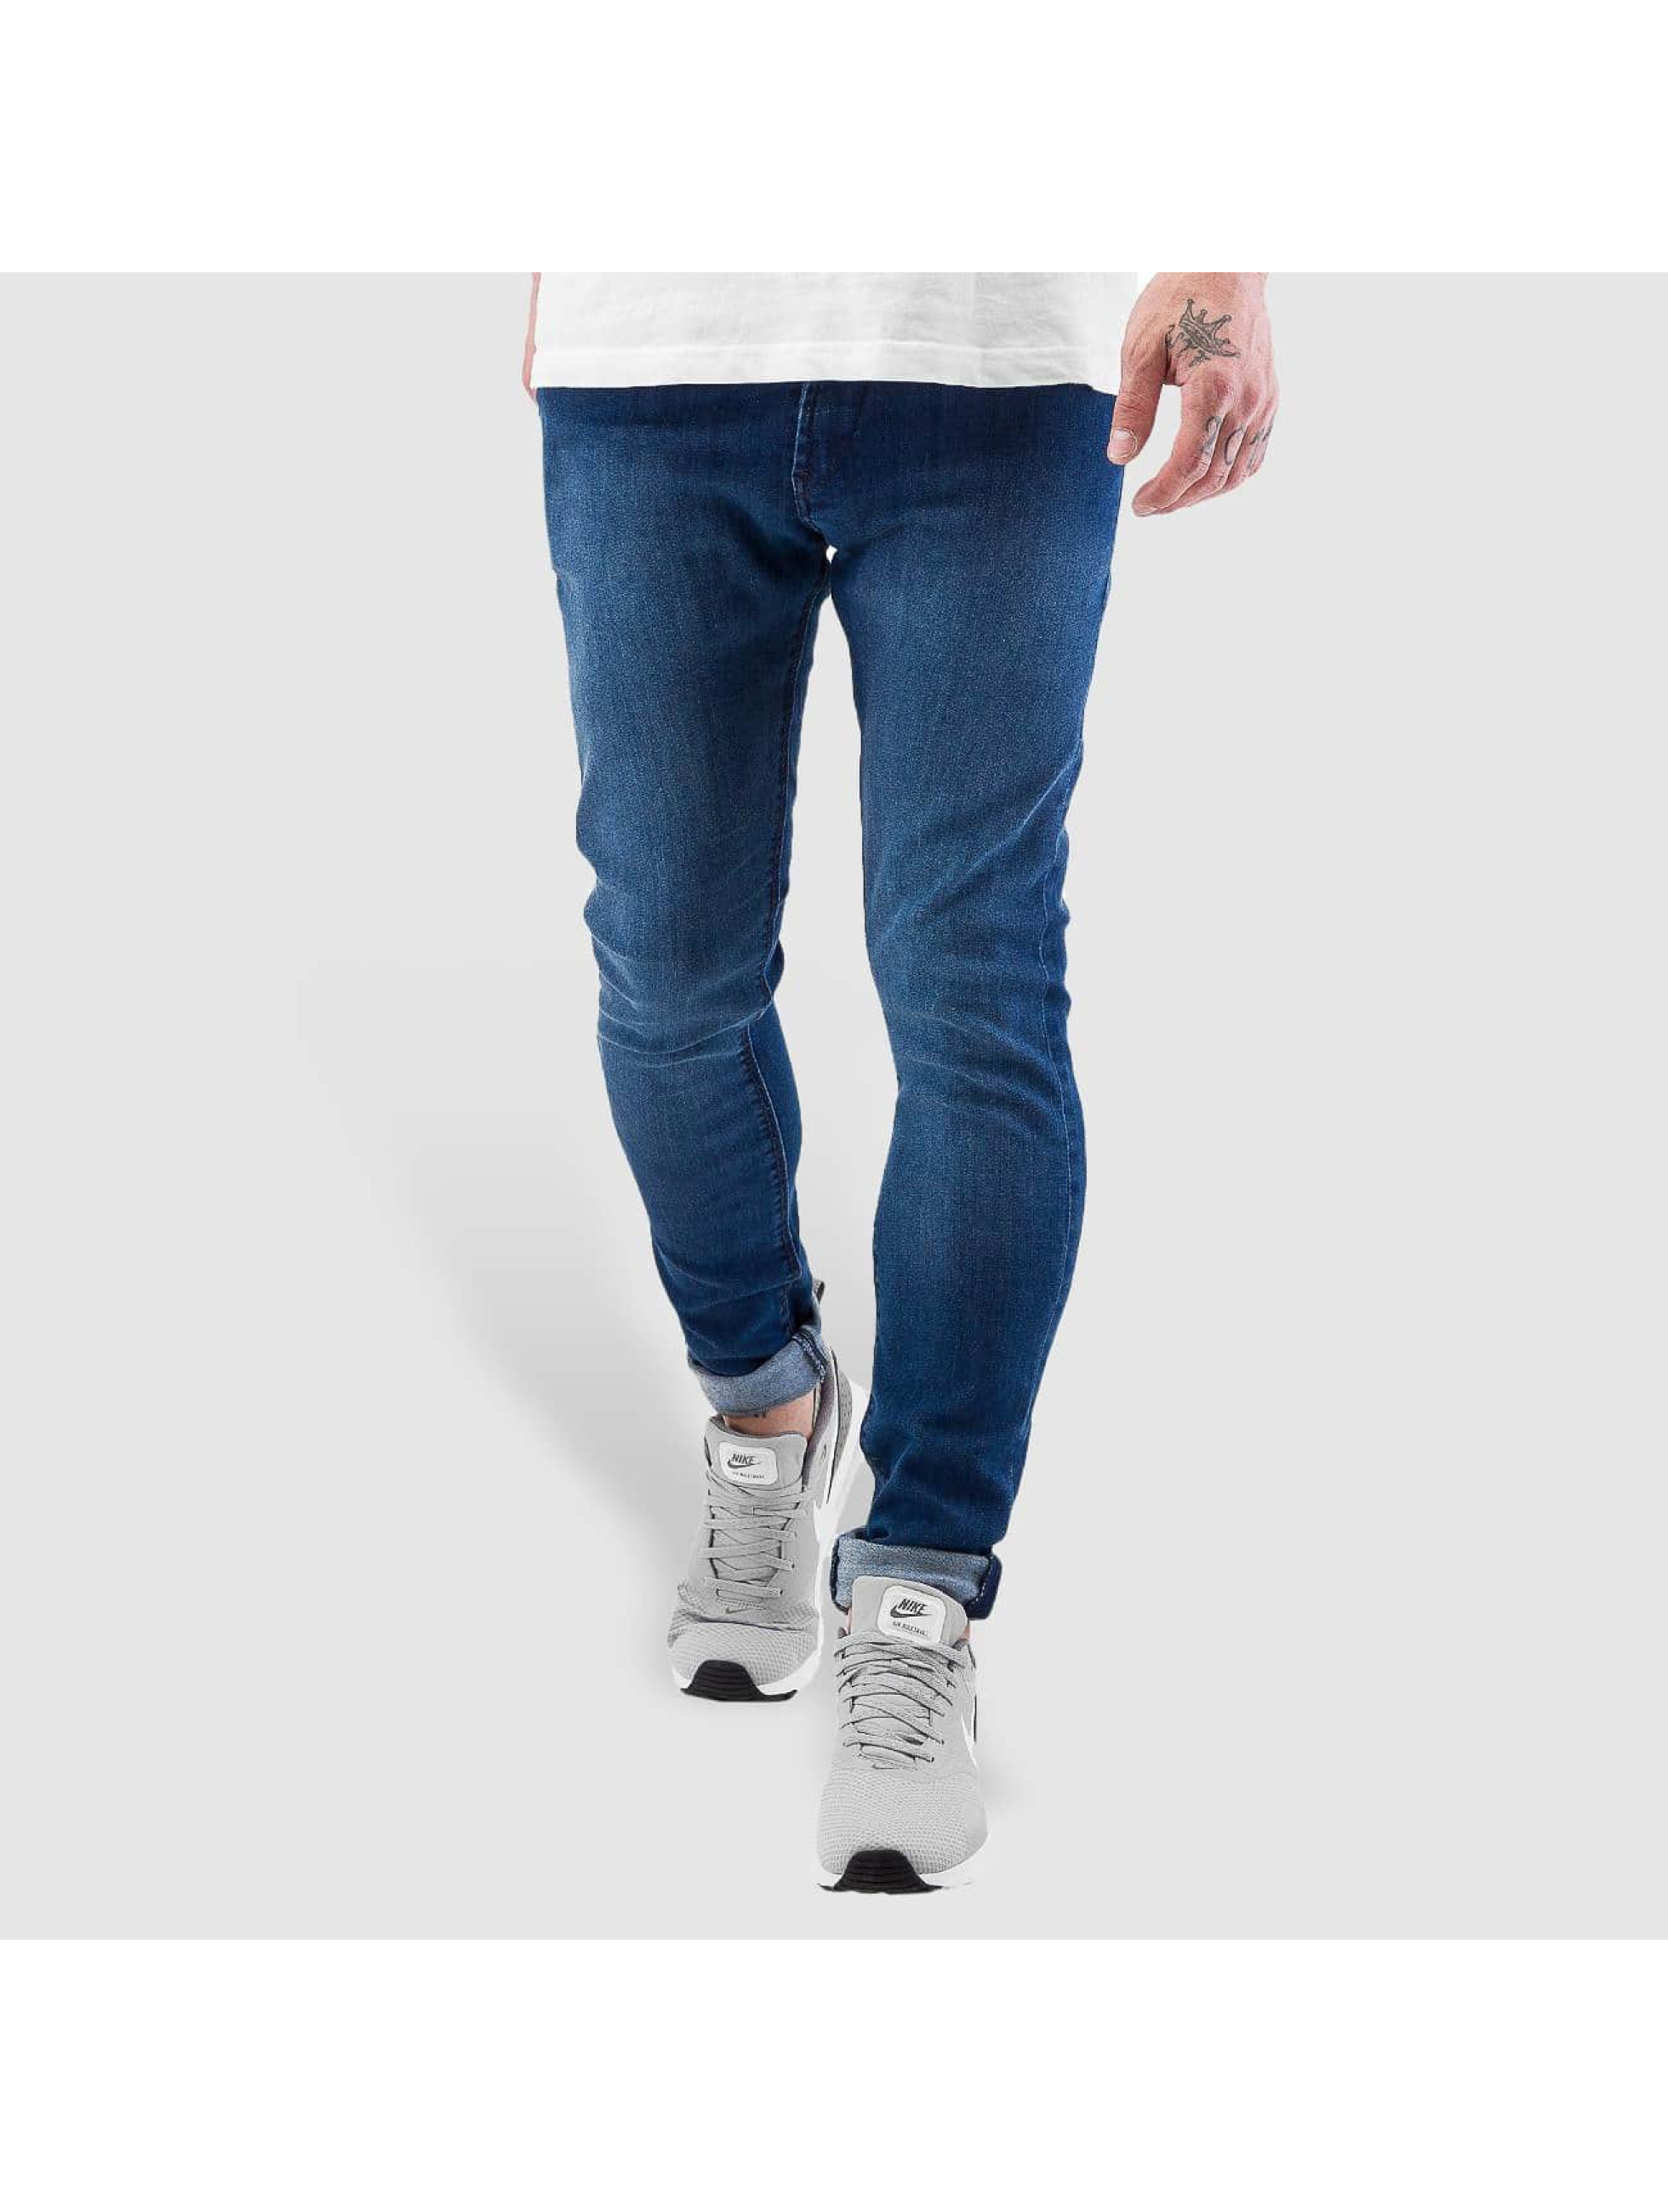  Reell Jeans Jean / Slim Radar Stretch Super Slim Fit en bleu